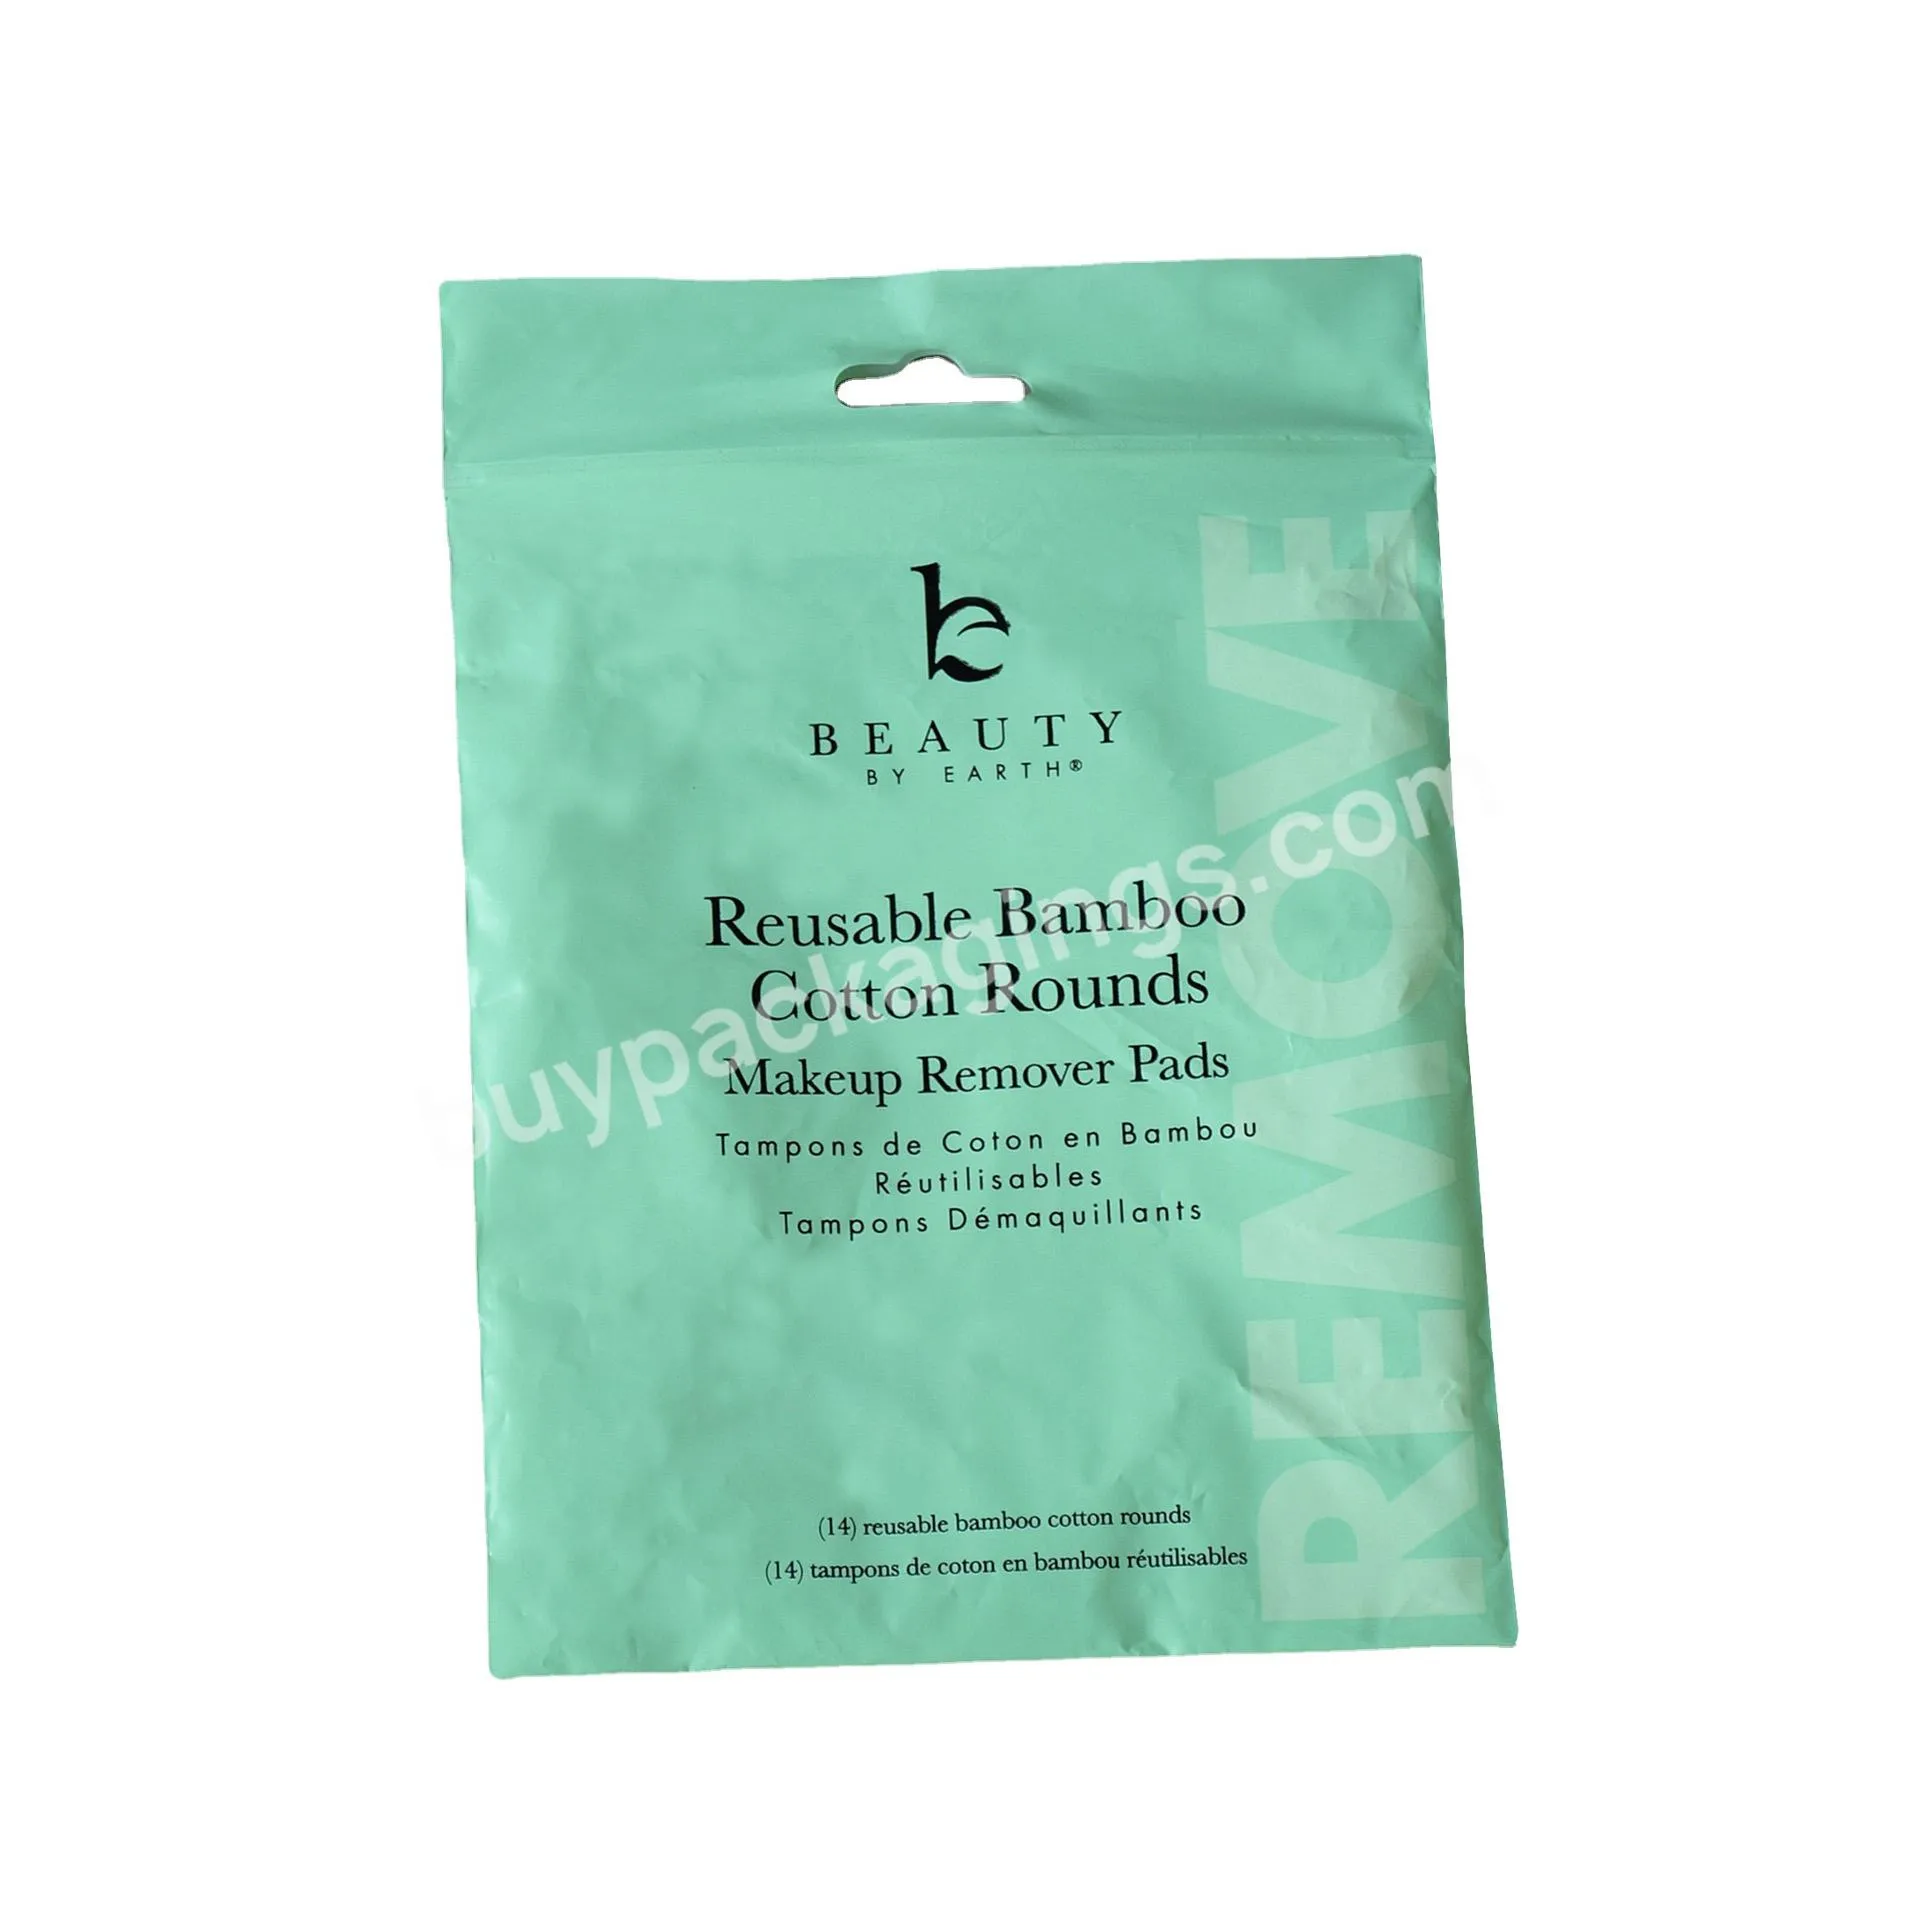 Wholesale 100% Biodegradable Compostable Pla Plastic Bag Die Cut Shopping Bag - Buy Biodegradable Plastic Bag Compostable Shopping Bag,Biodegradable Plastic Bags Wholesale,Compostable Bags 100% Biodegradable.